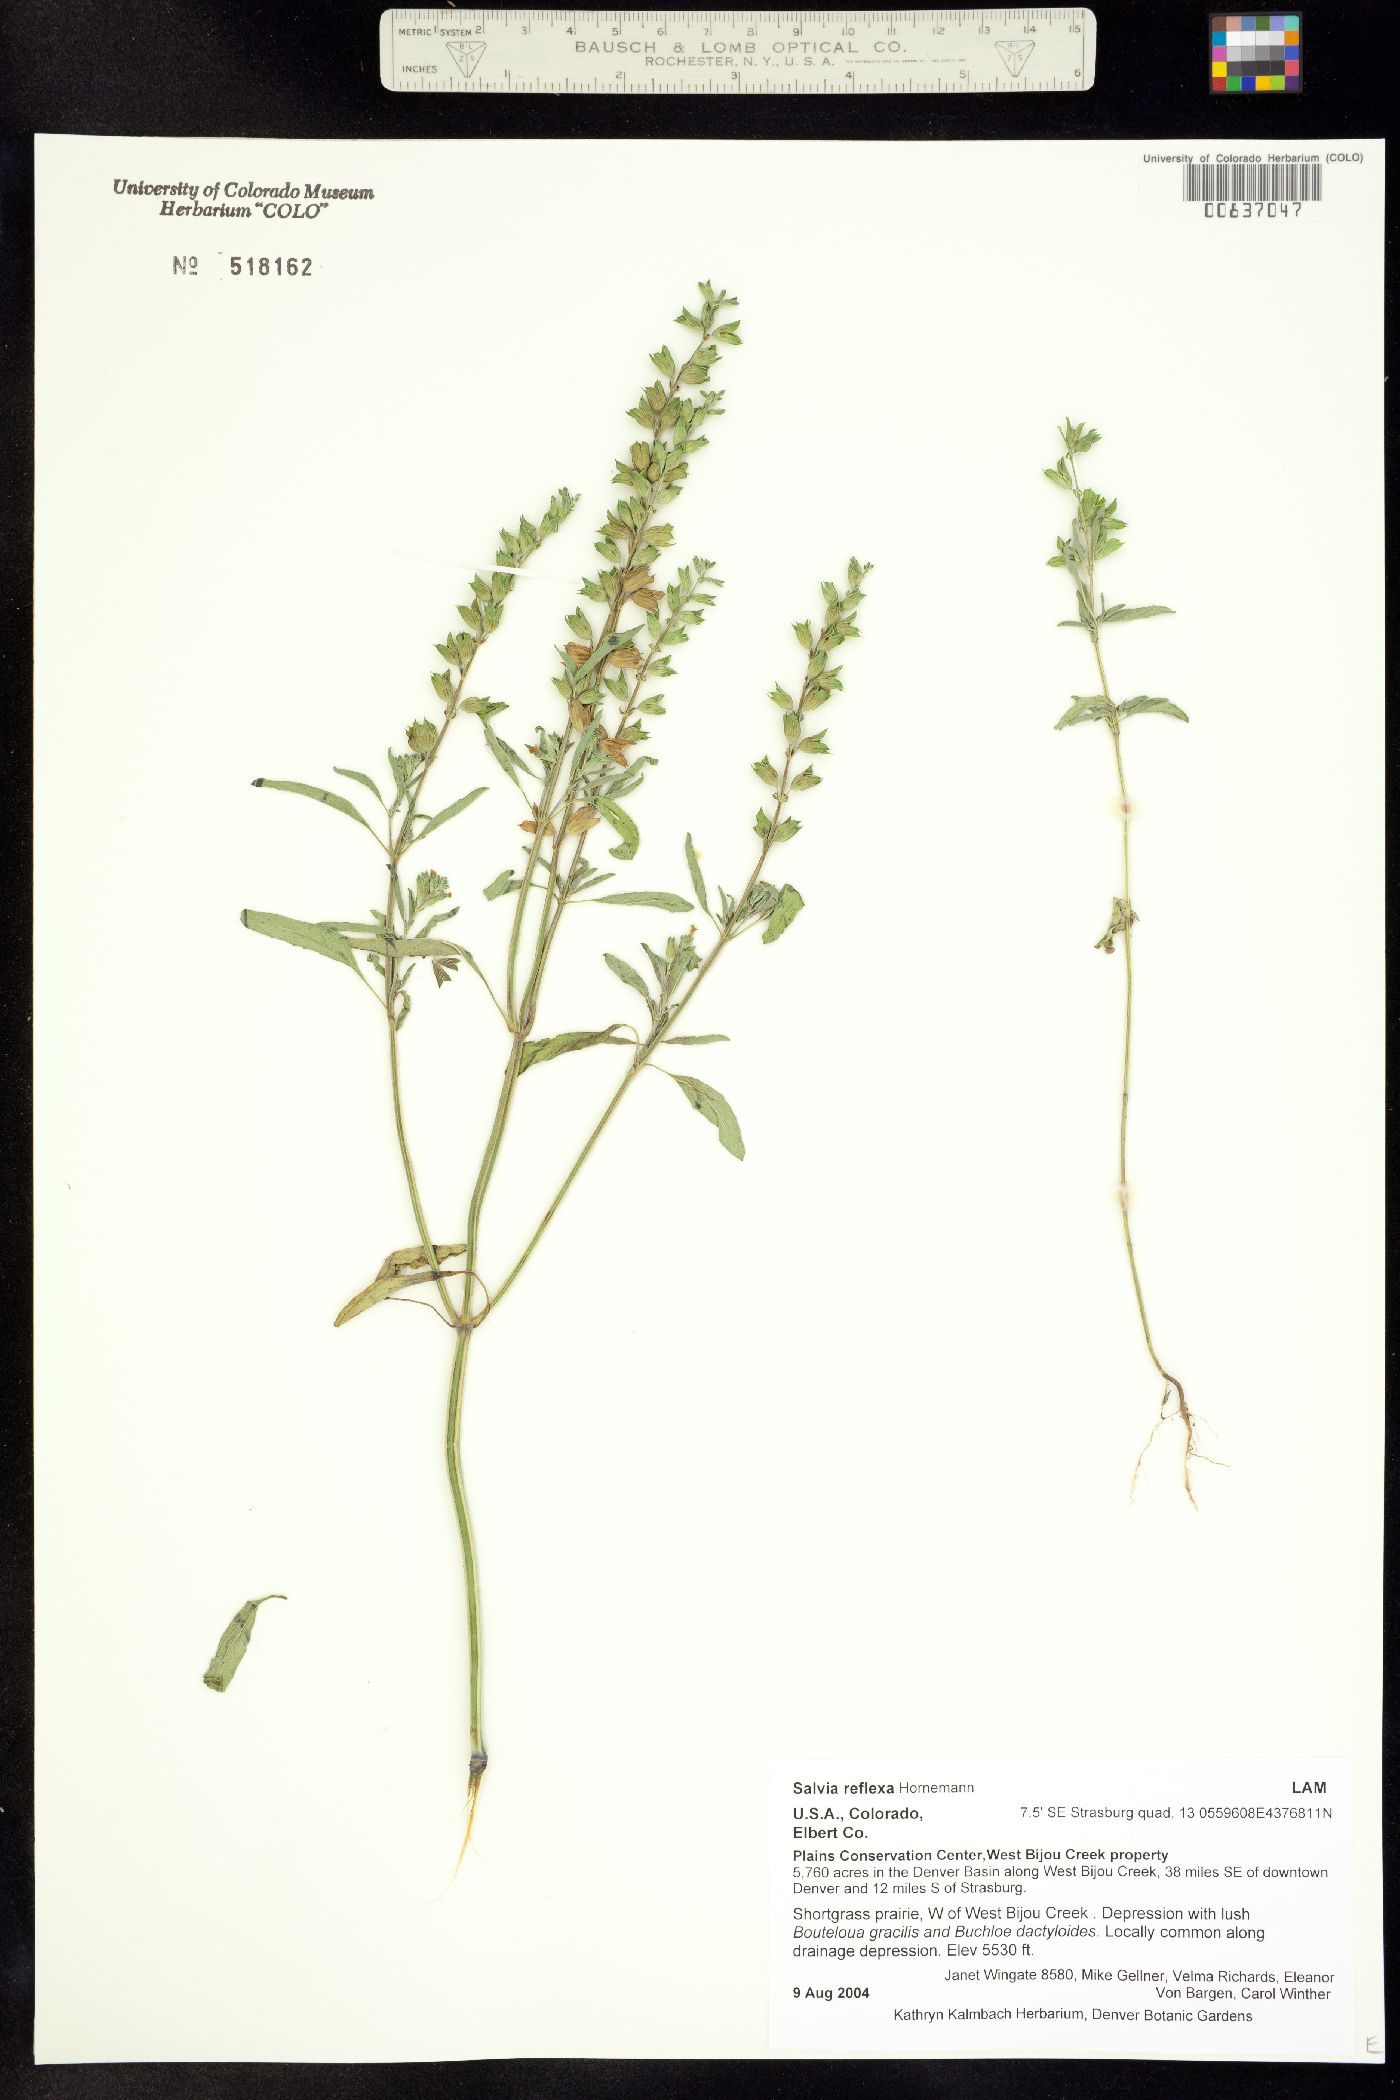 Salvia image